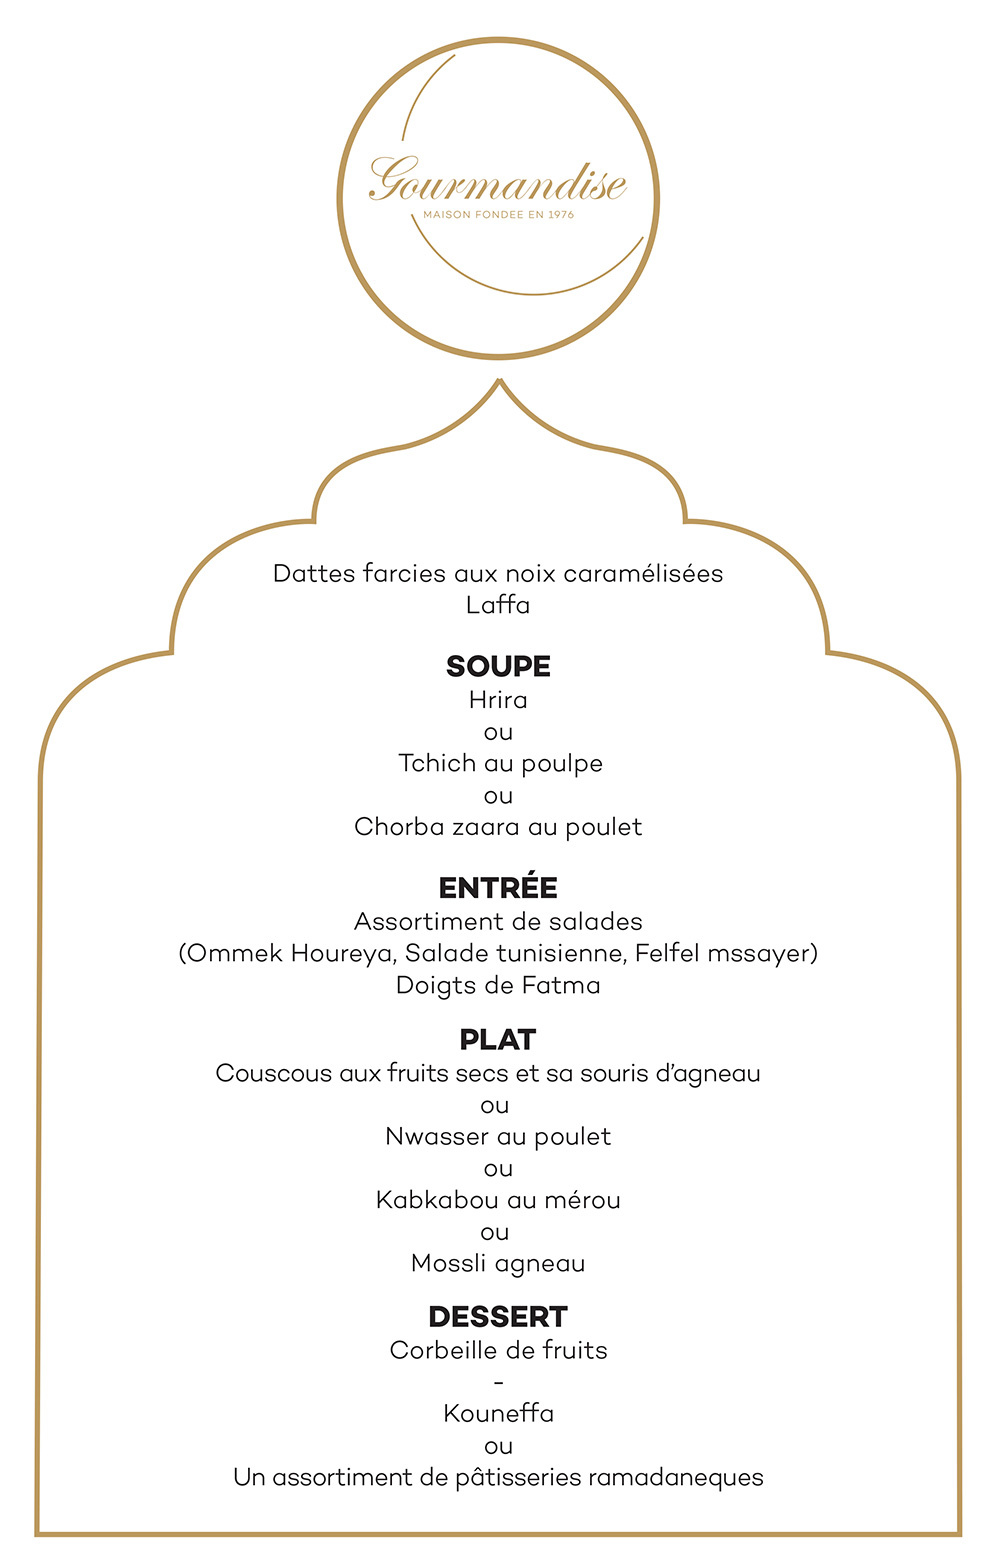 gourmandise-menu-180422-2.jpg